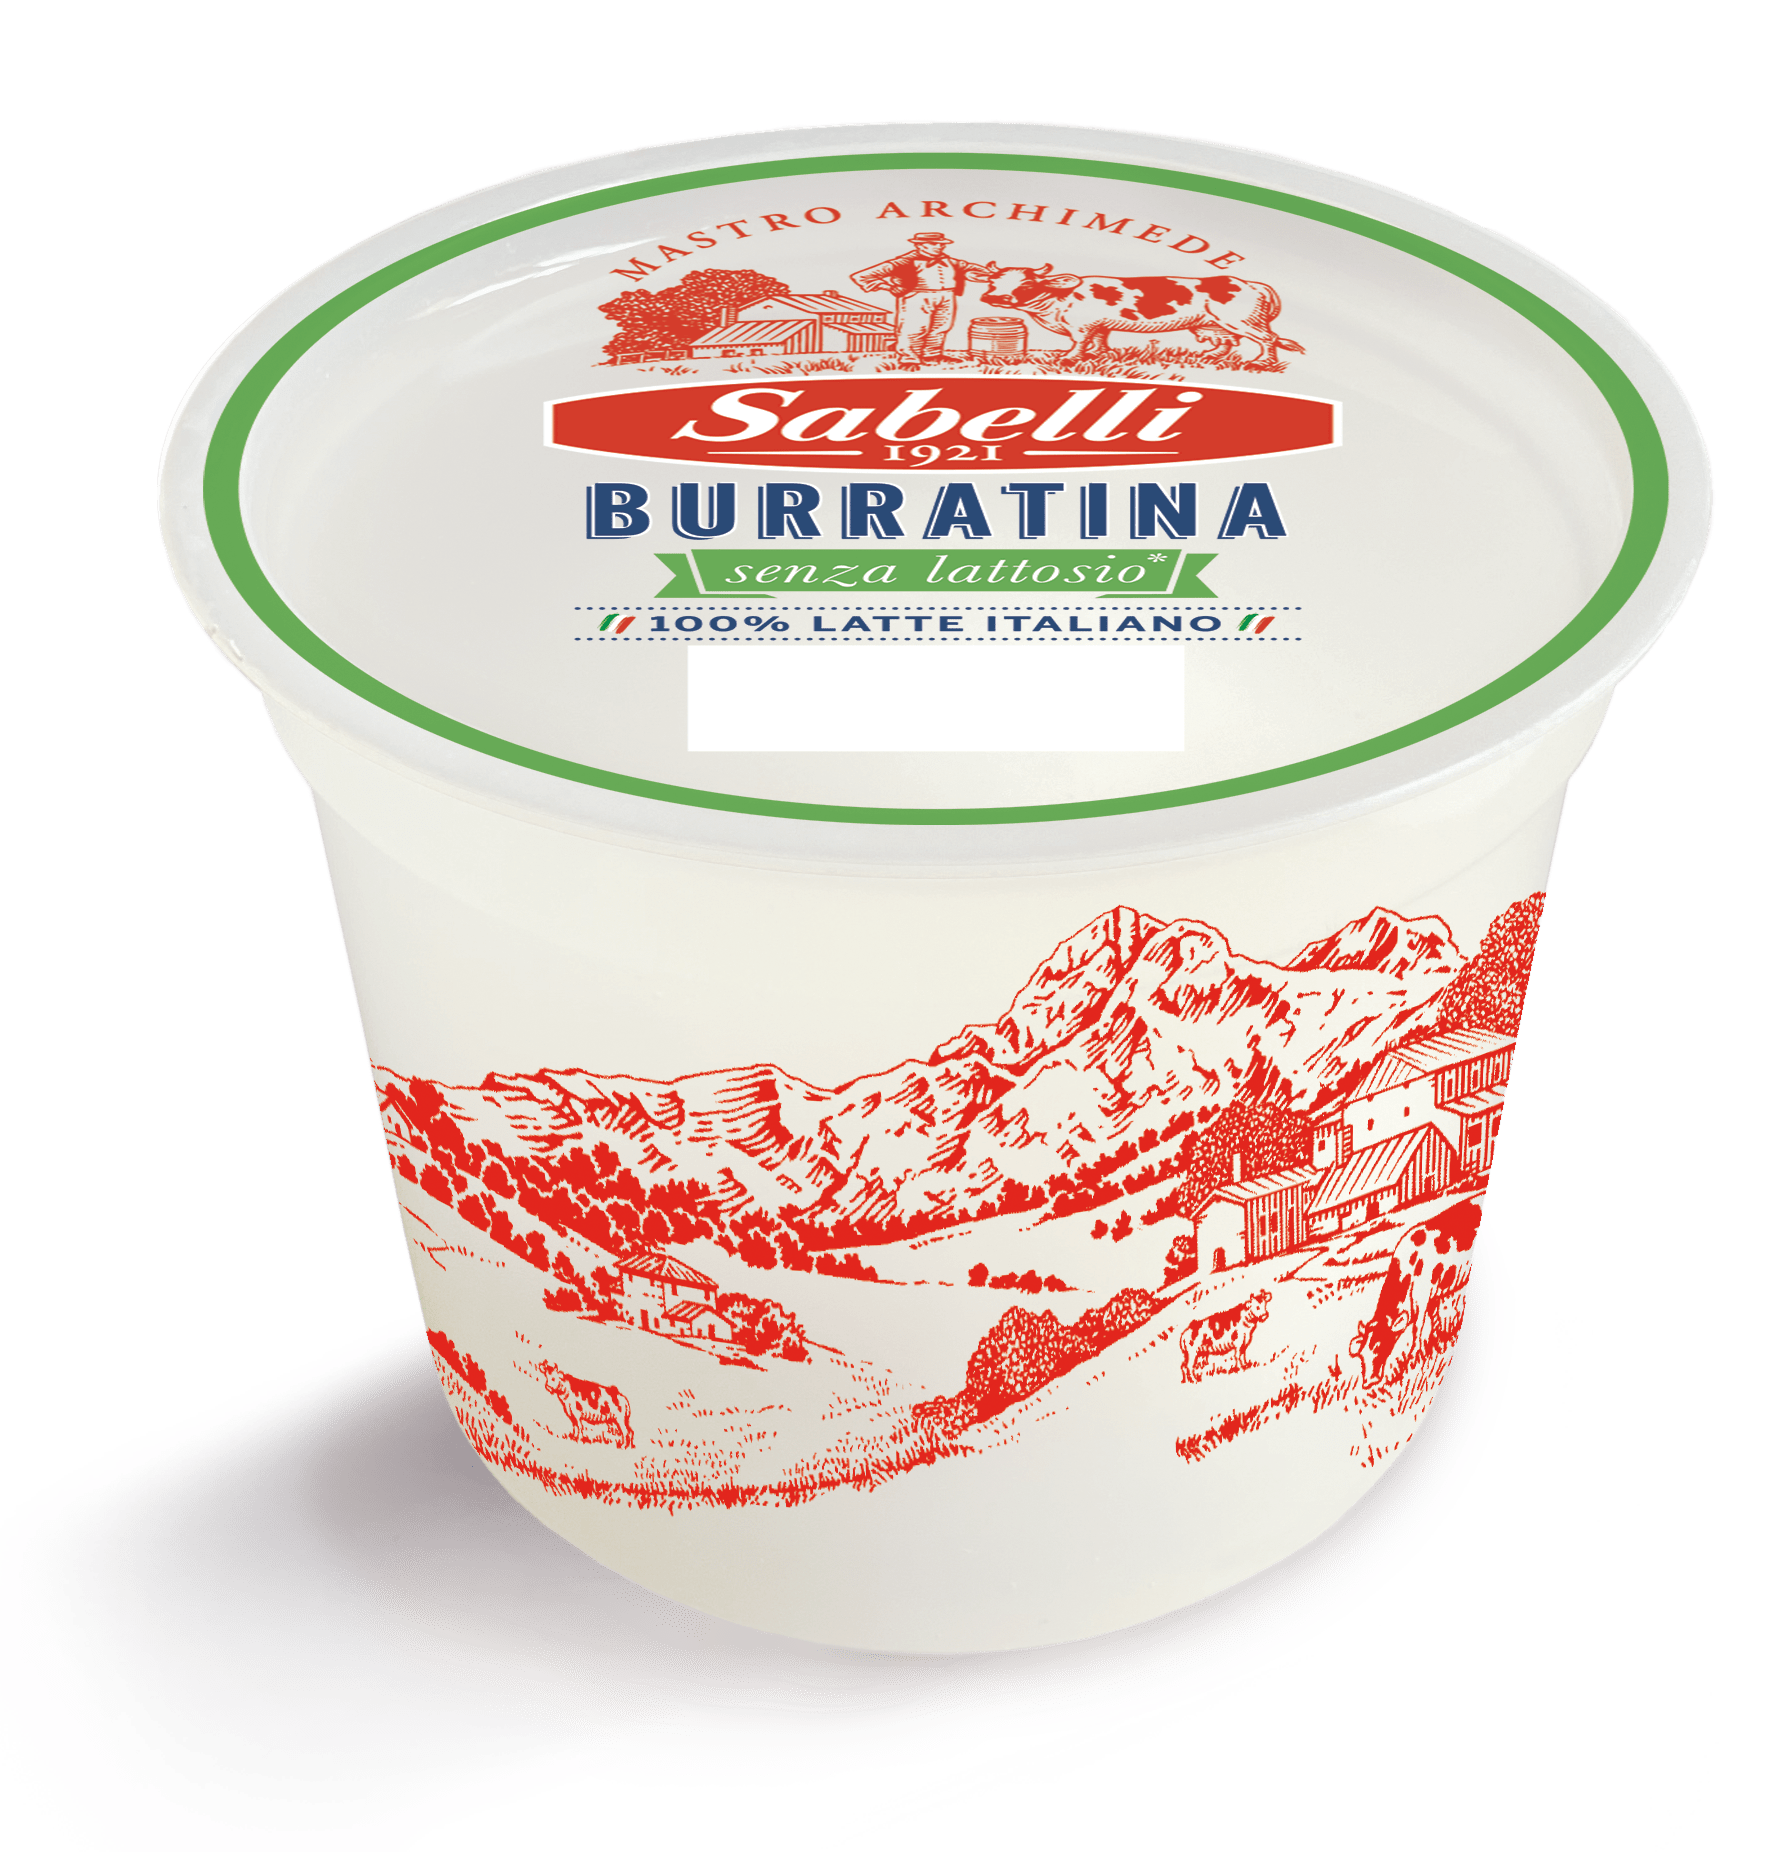 Burratina Take-away Senza Lattosio